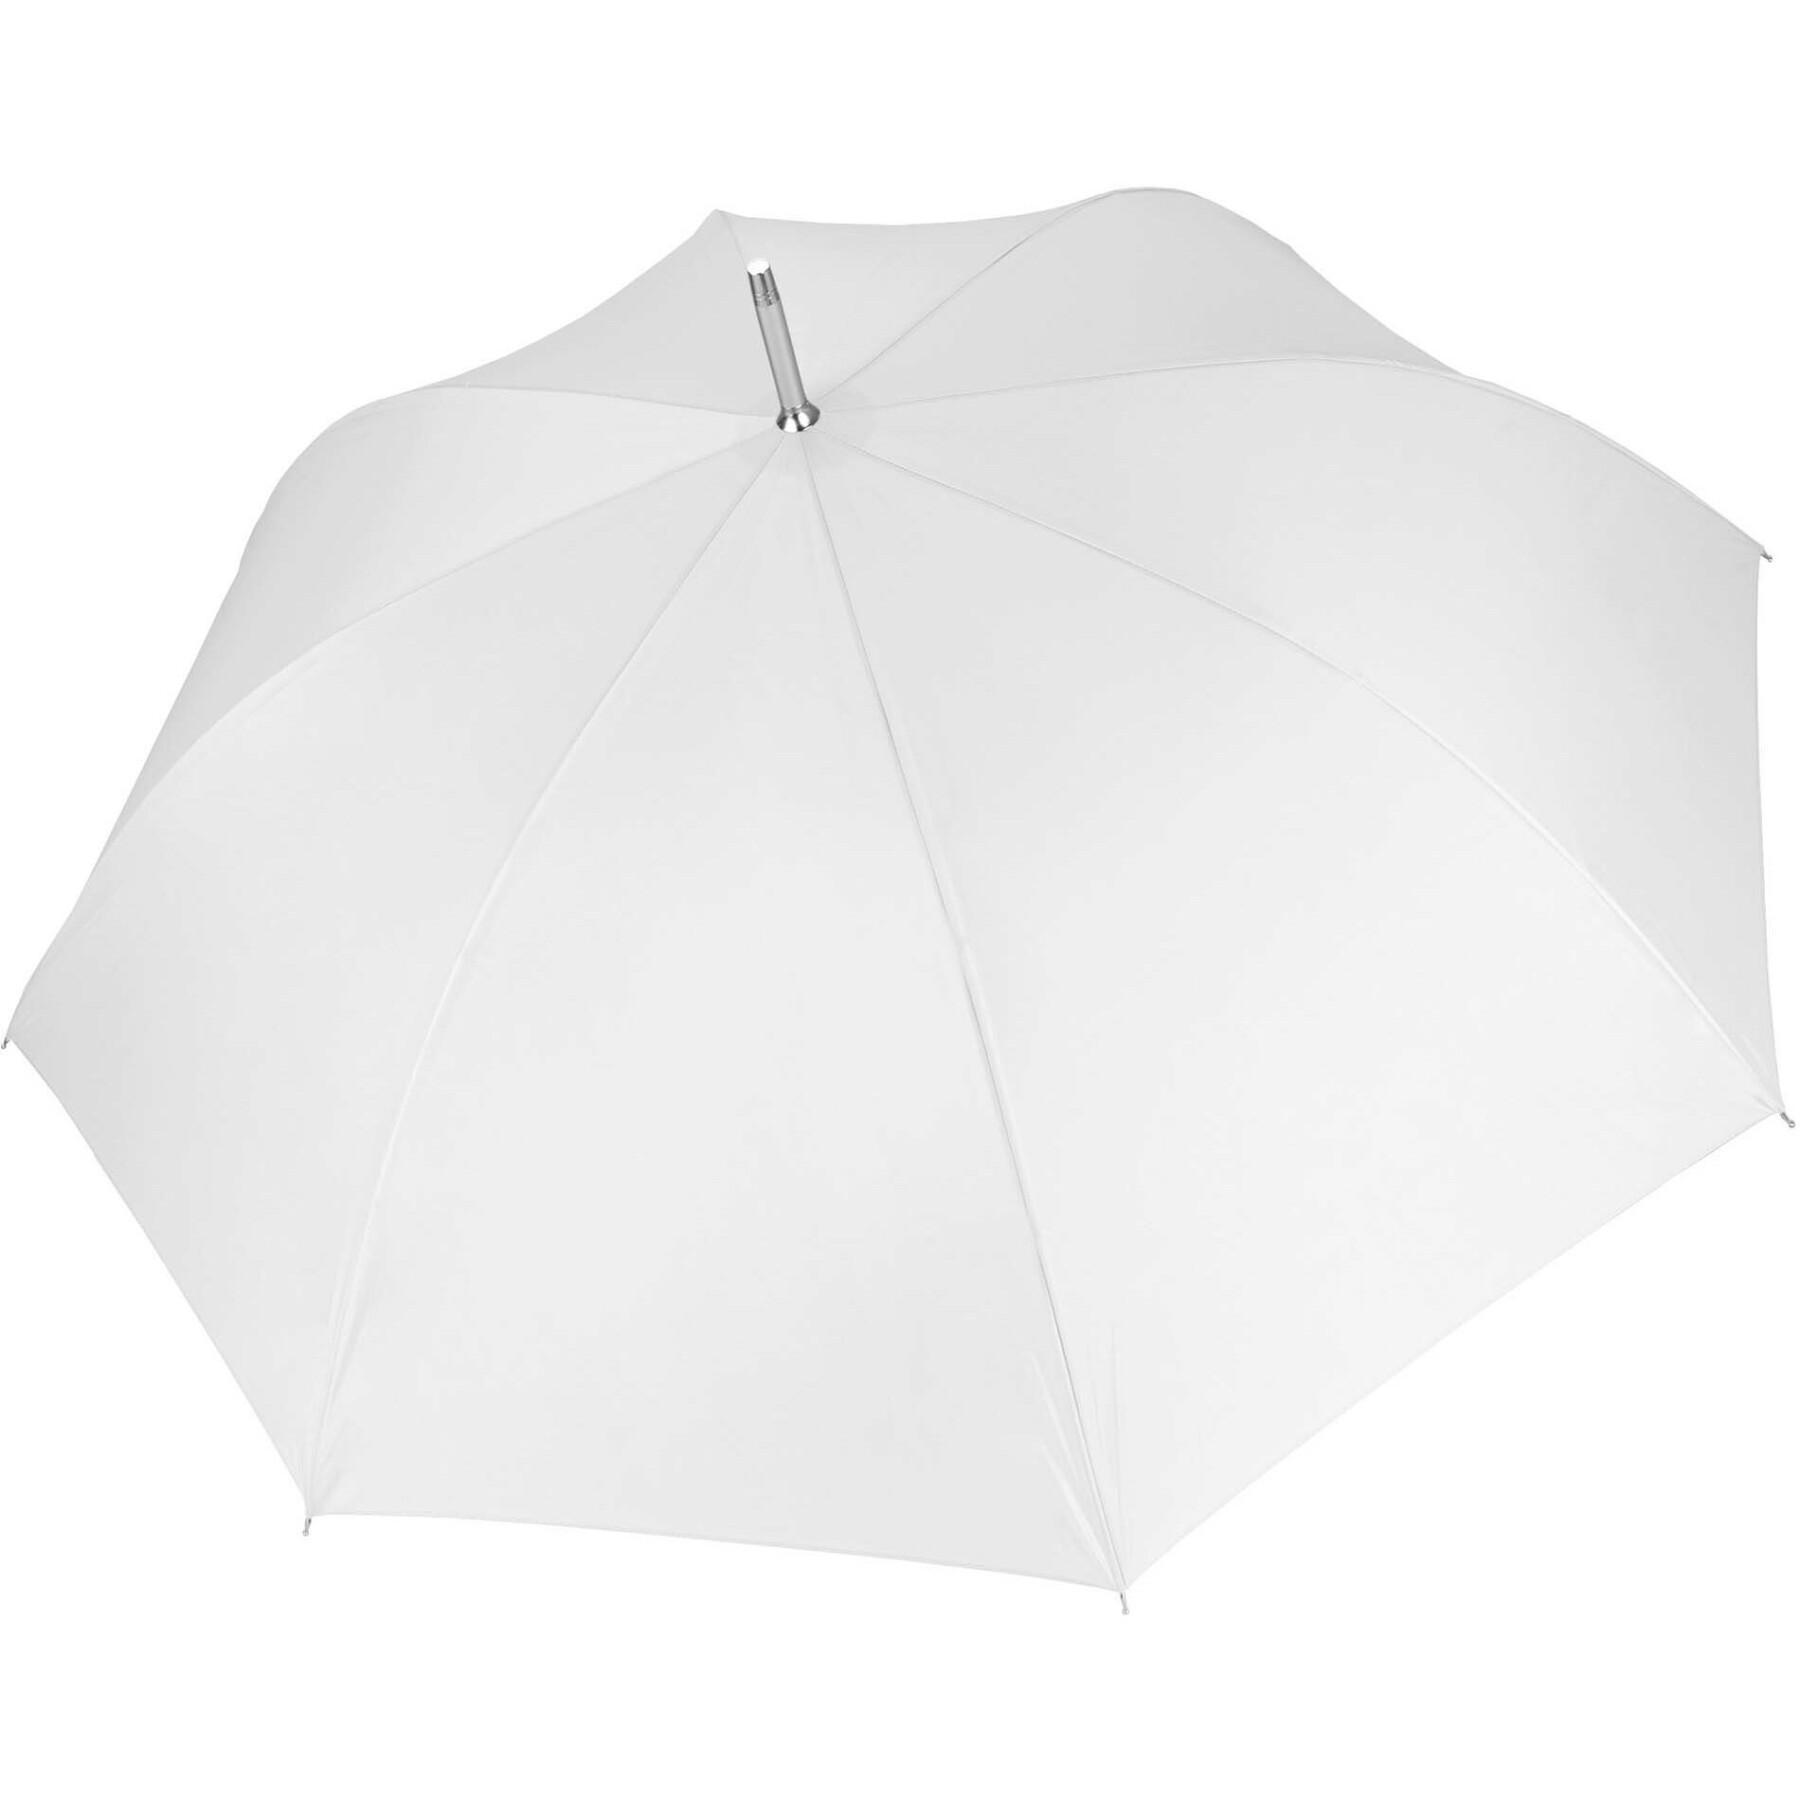 Umbrella Kimood Aluminium